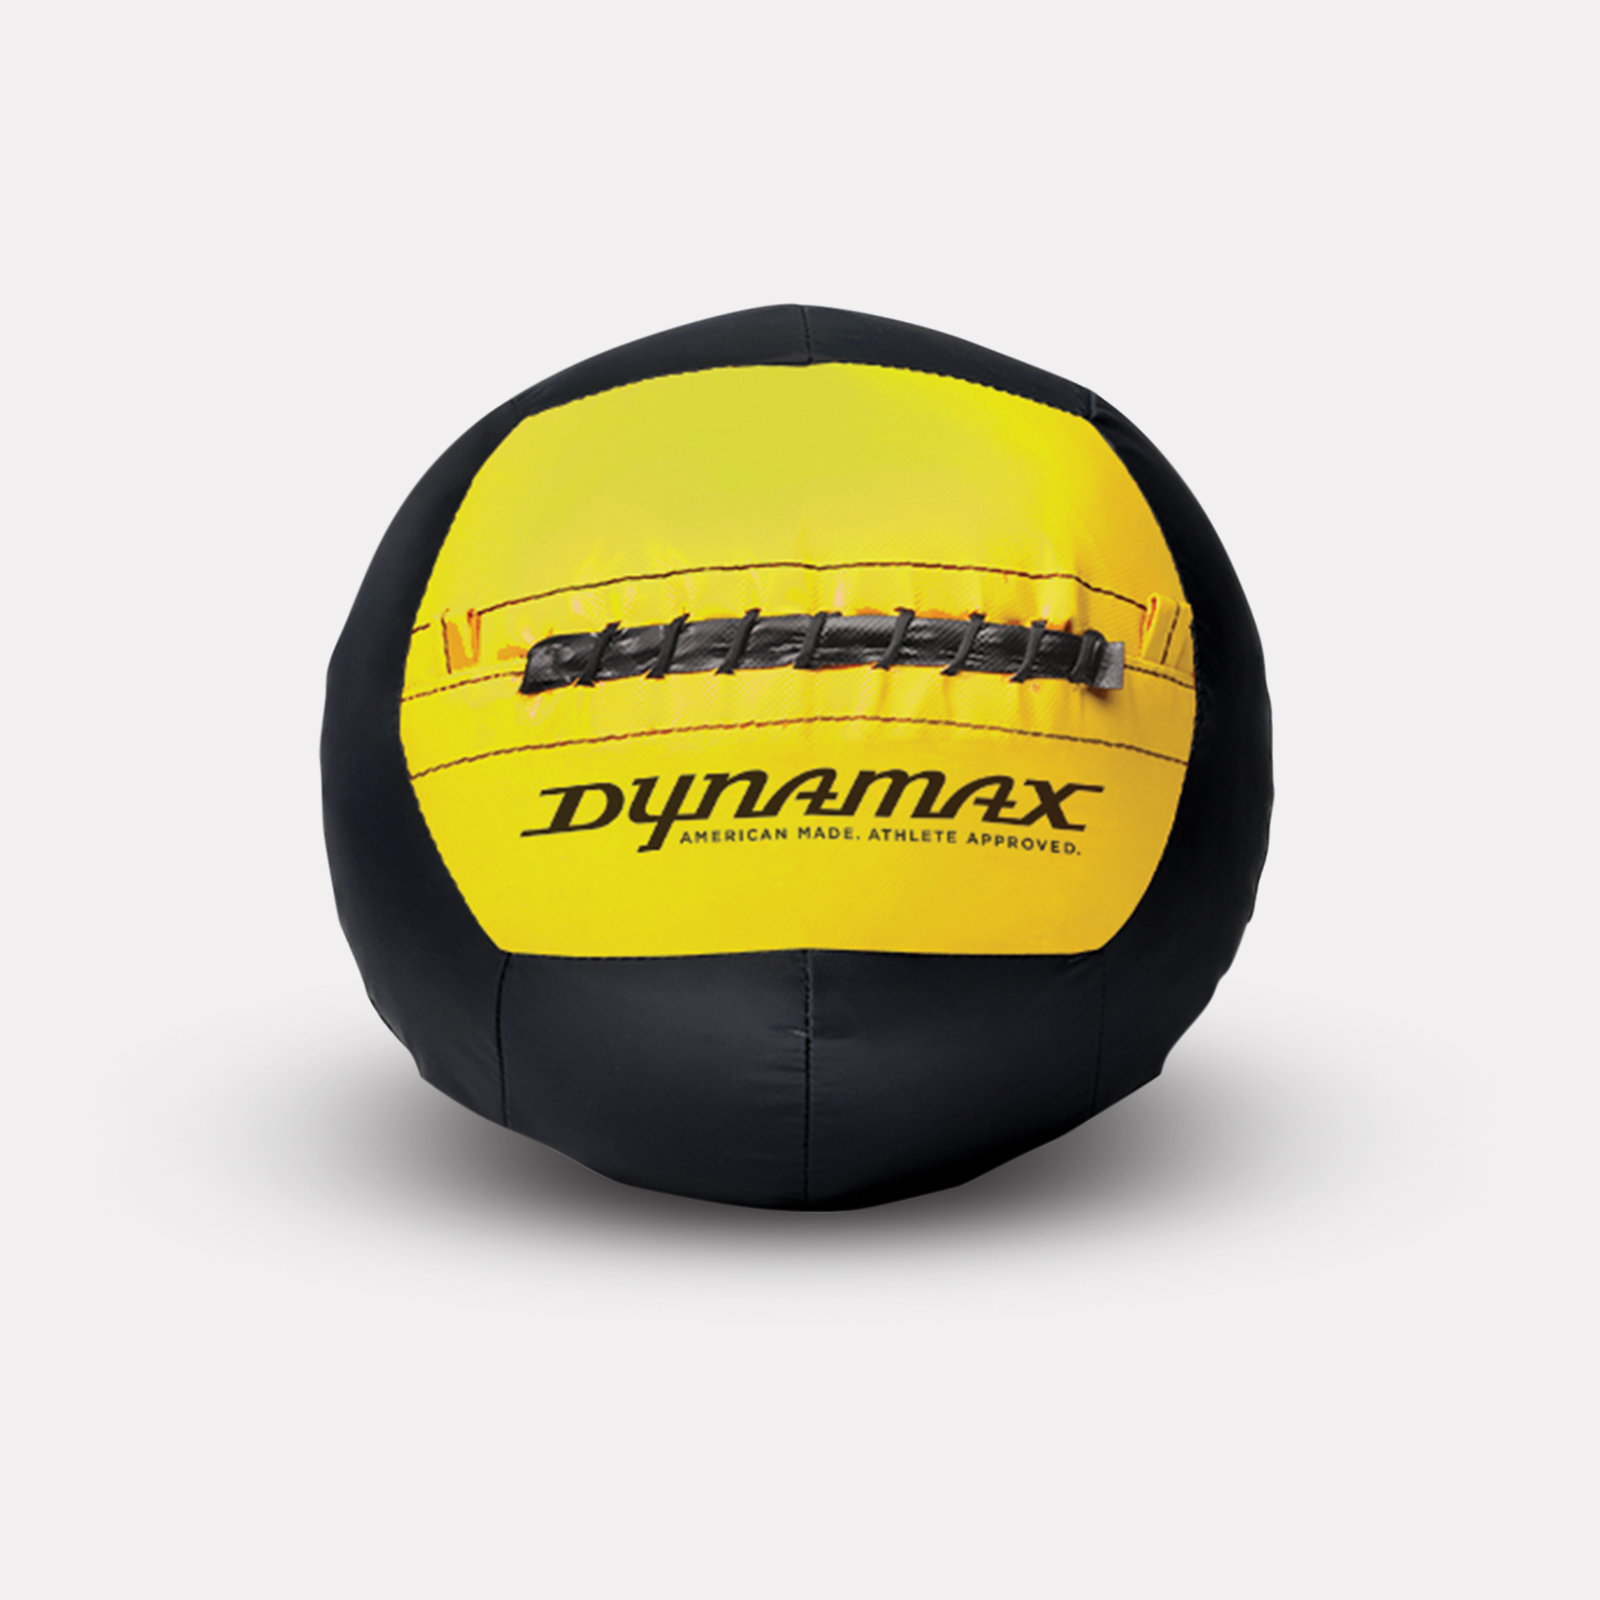 Dynamax Ball image